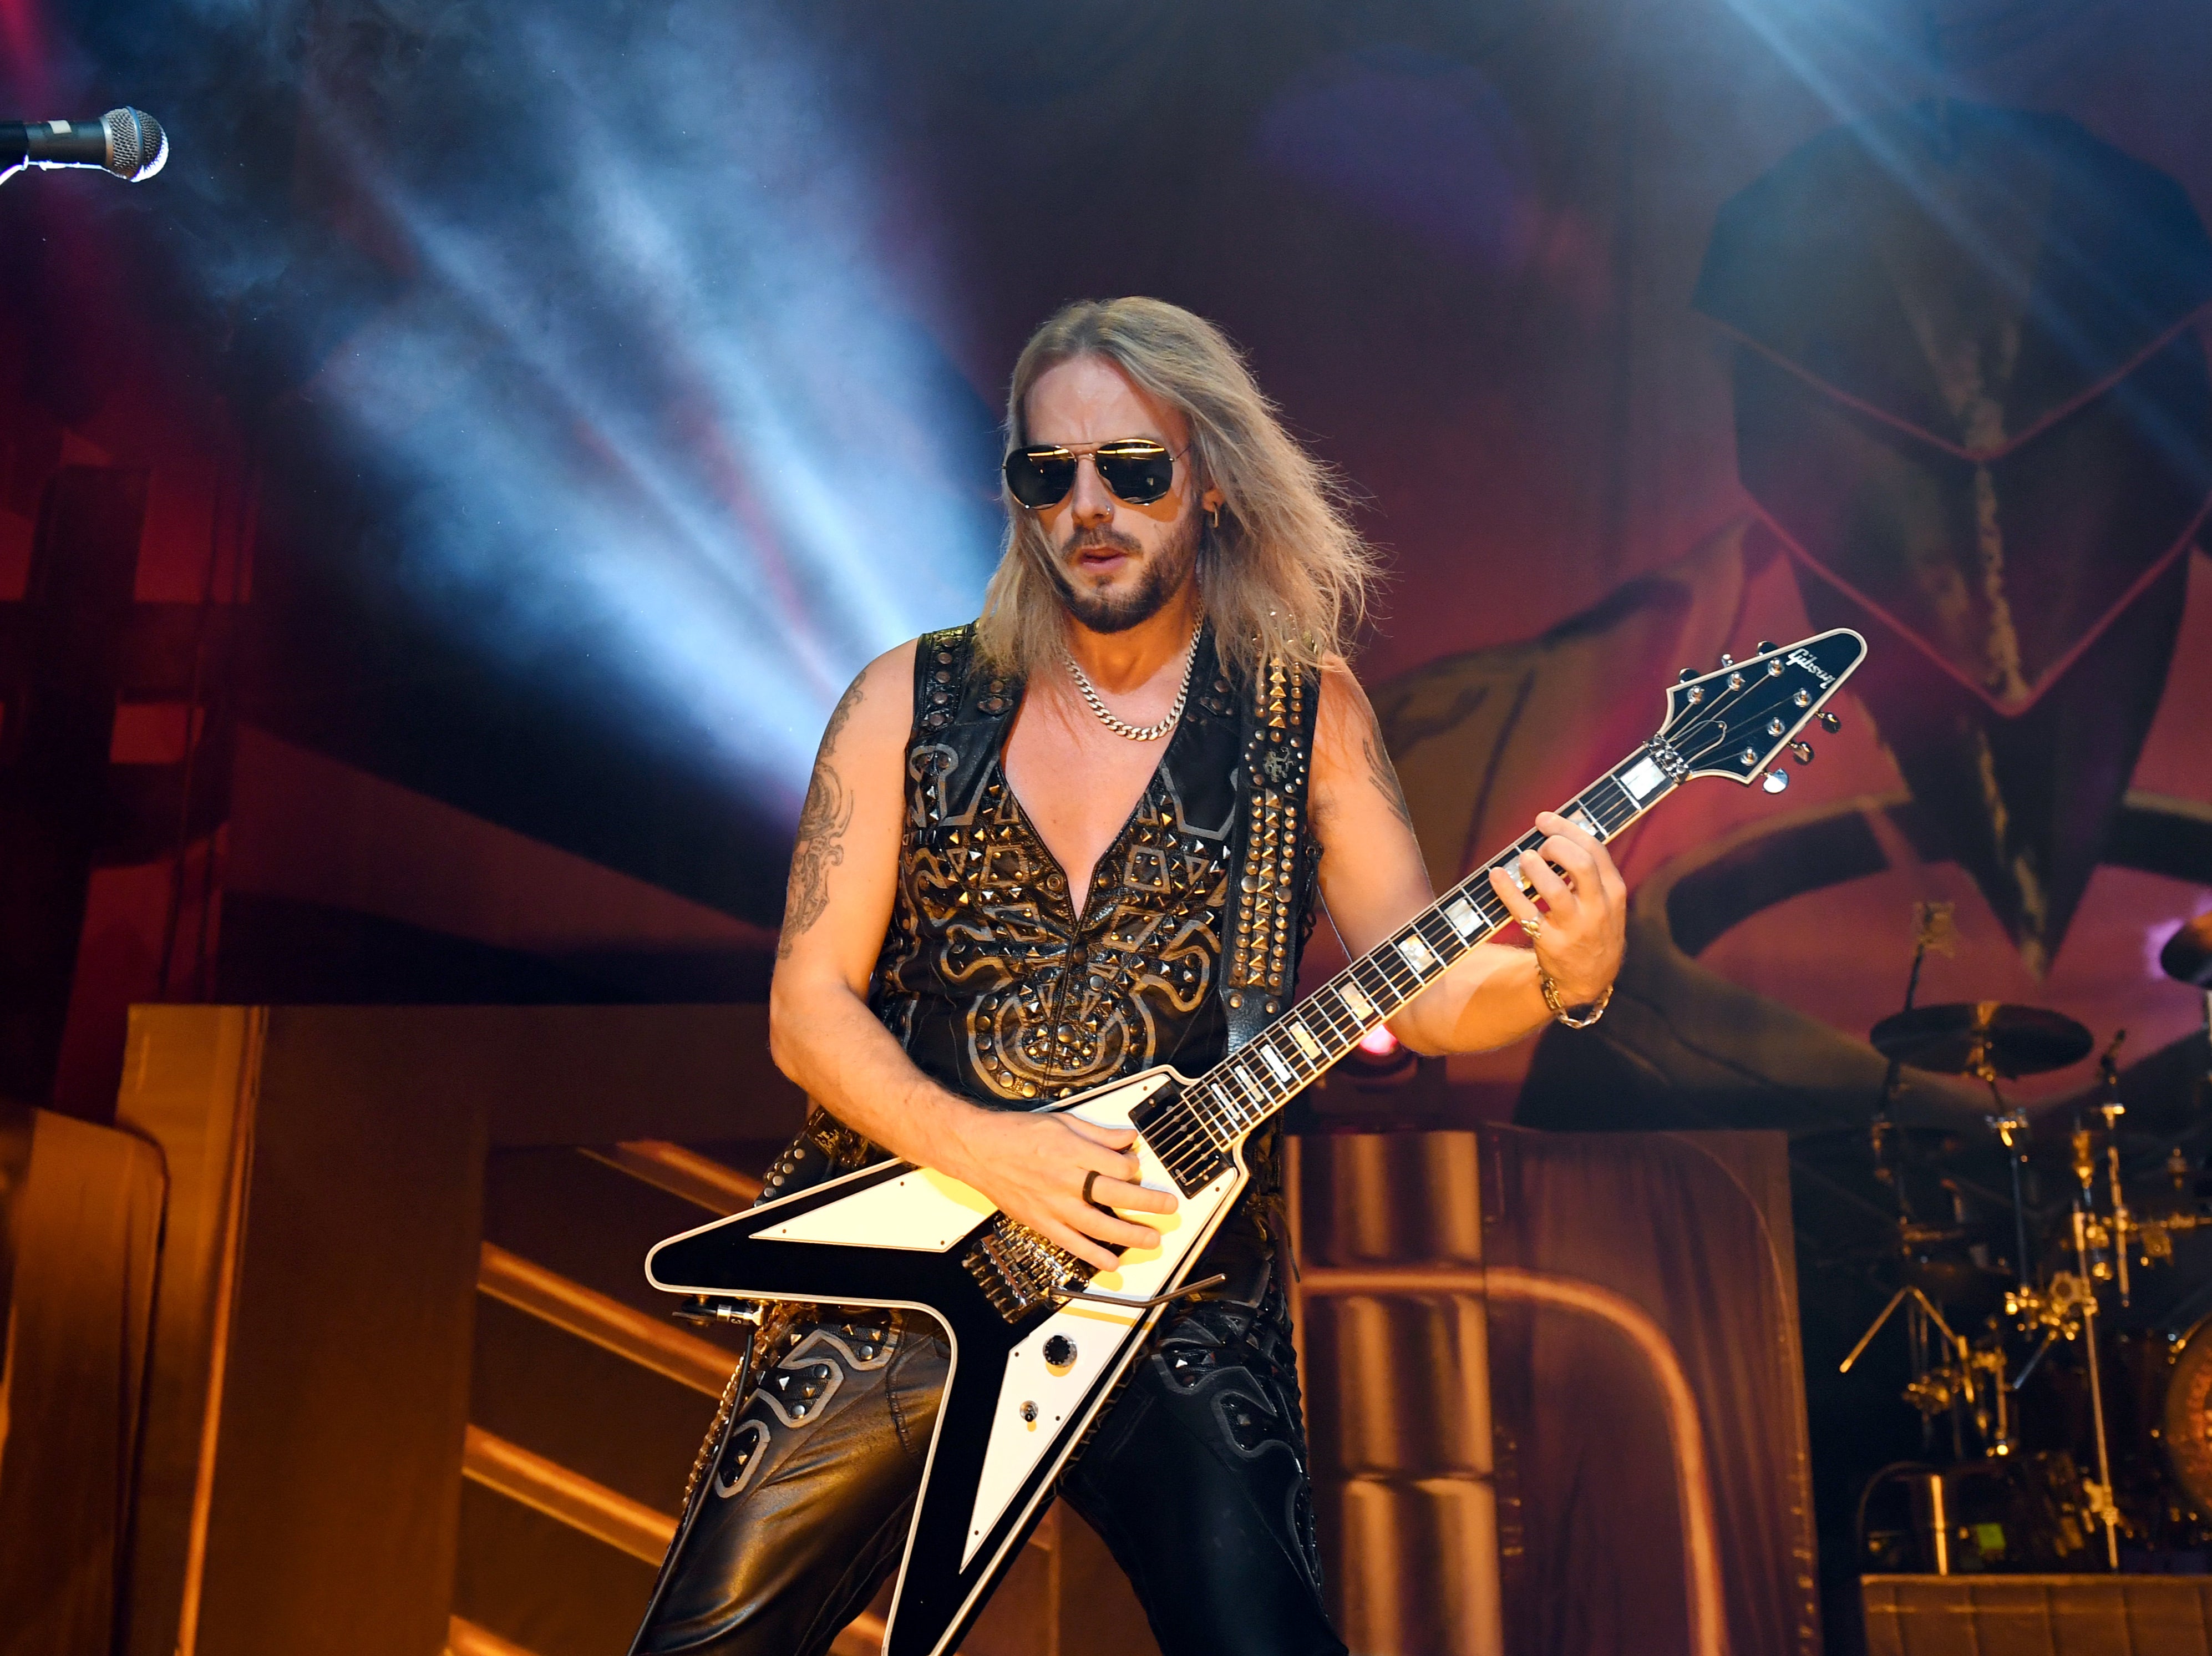 Richie Faulkner performing with Judas Priest in 2019